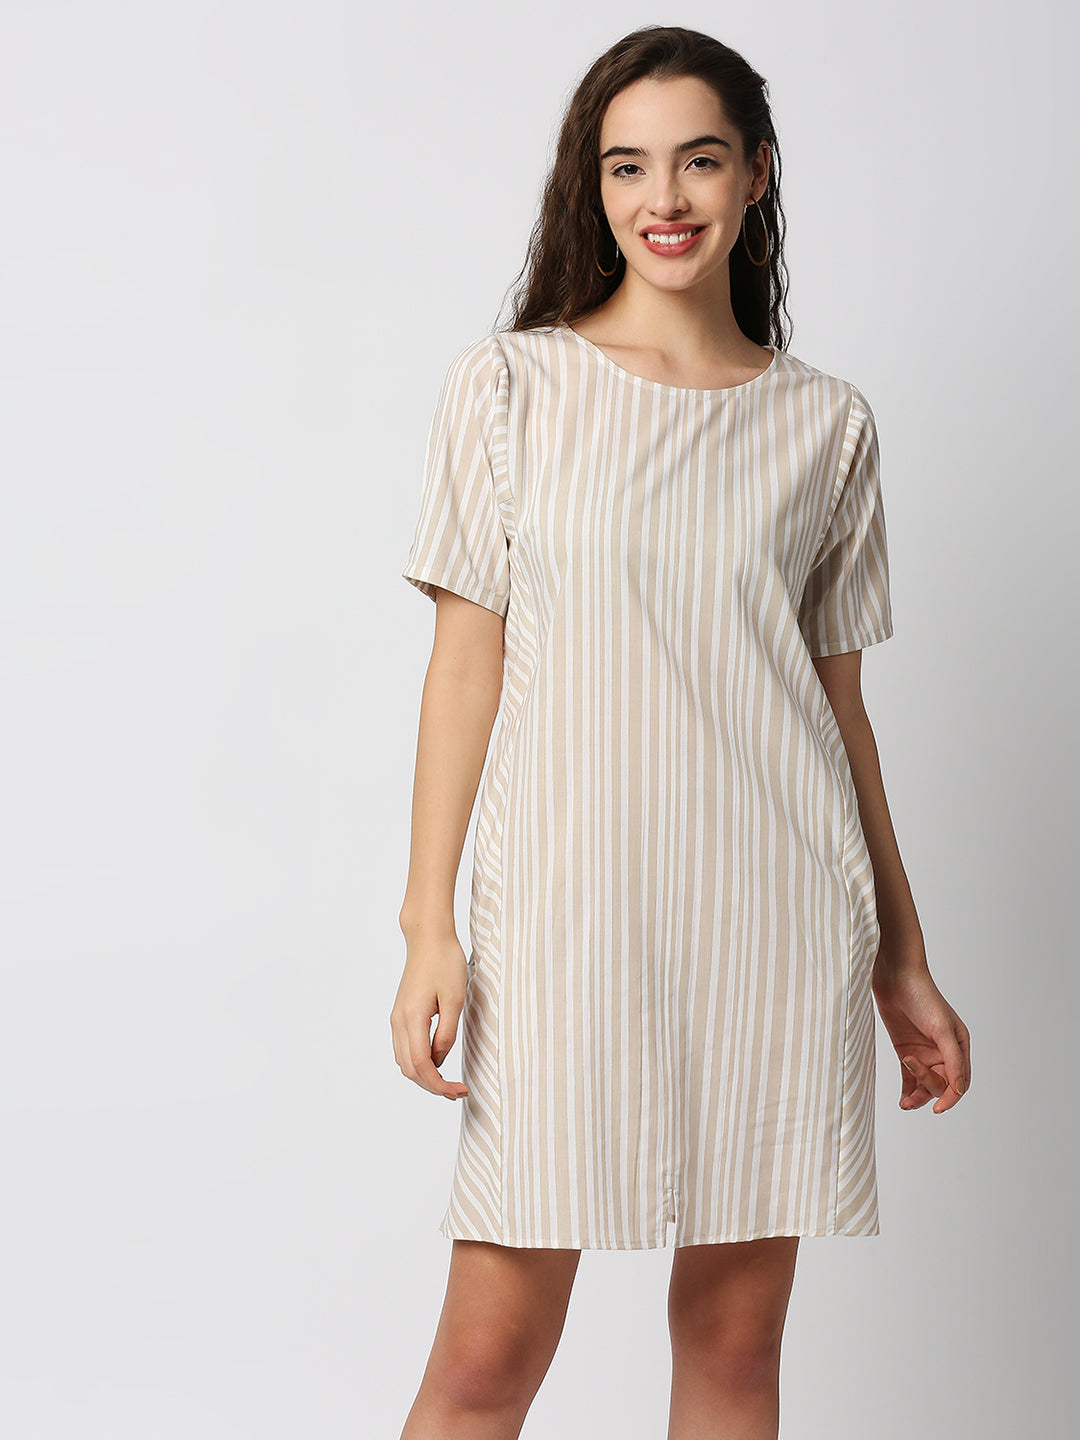 Mantra striped  A-line dress